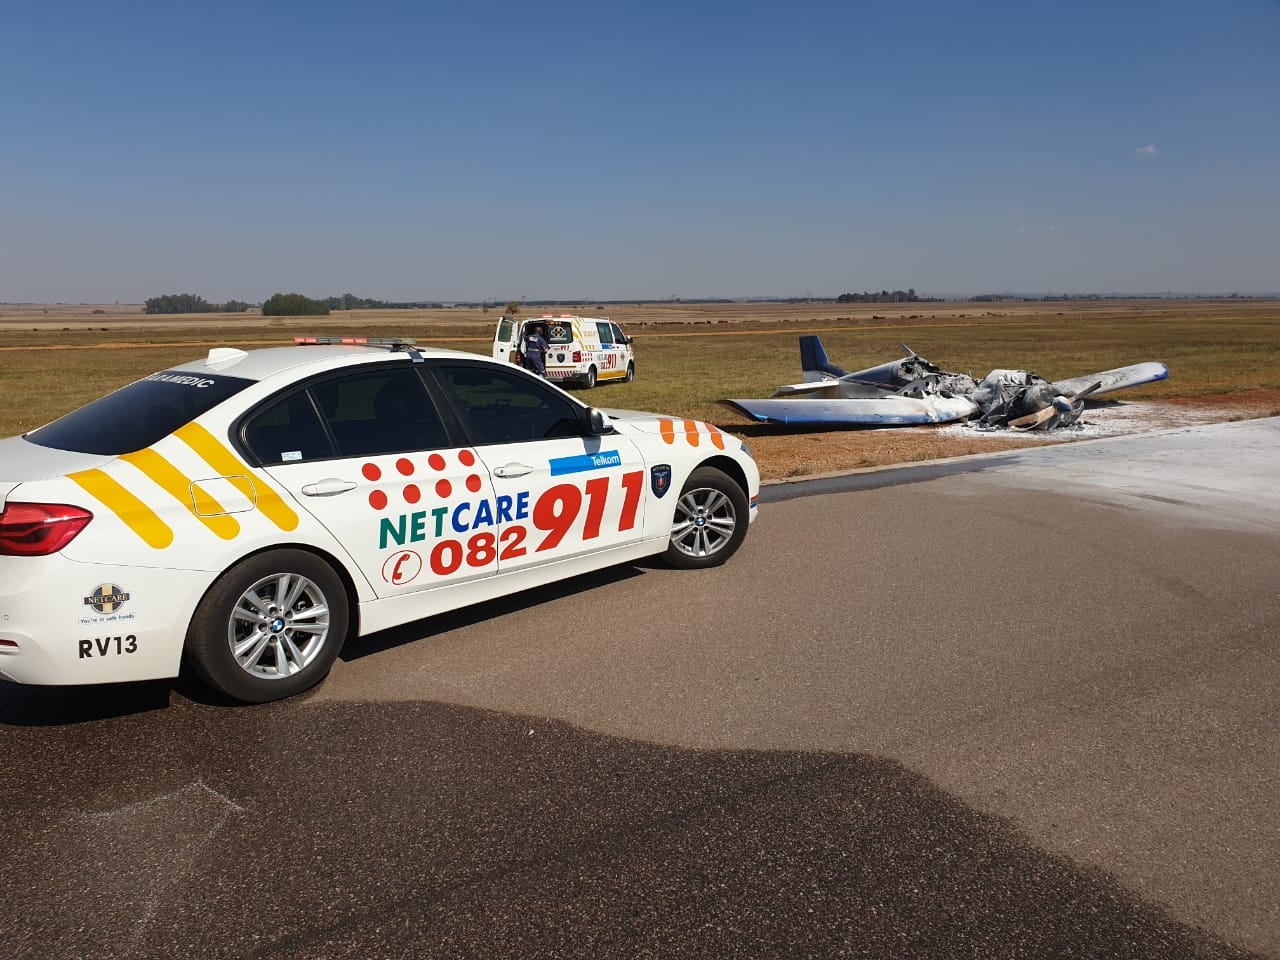 Pretoria Plane Crash